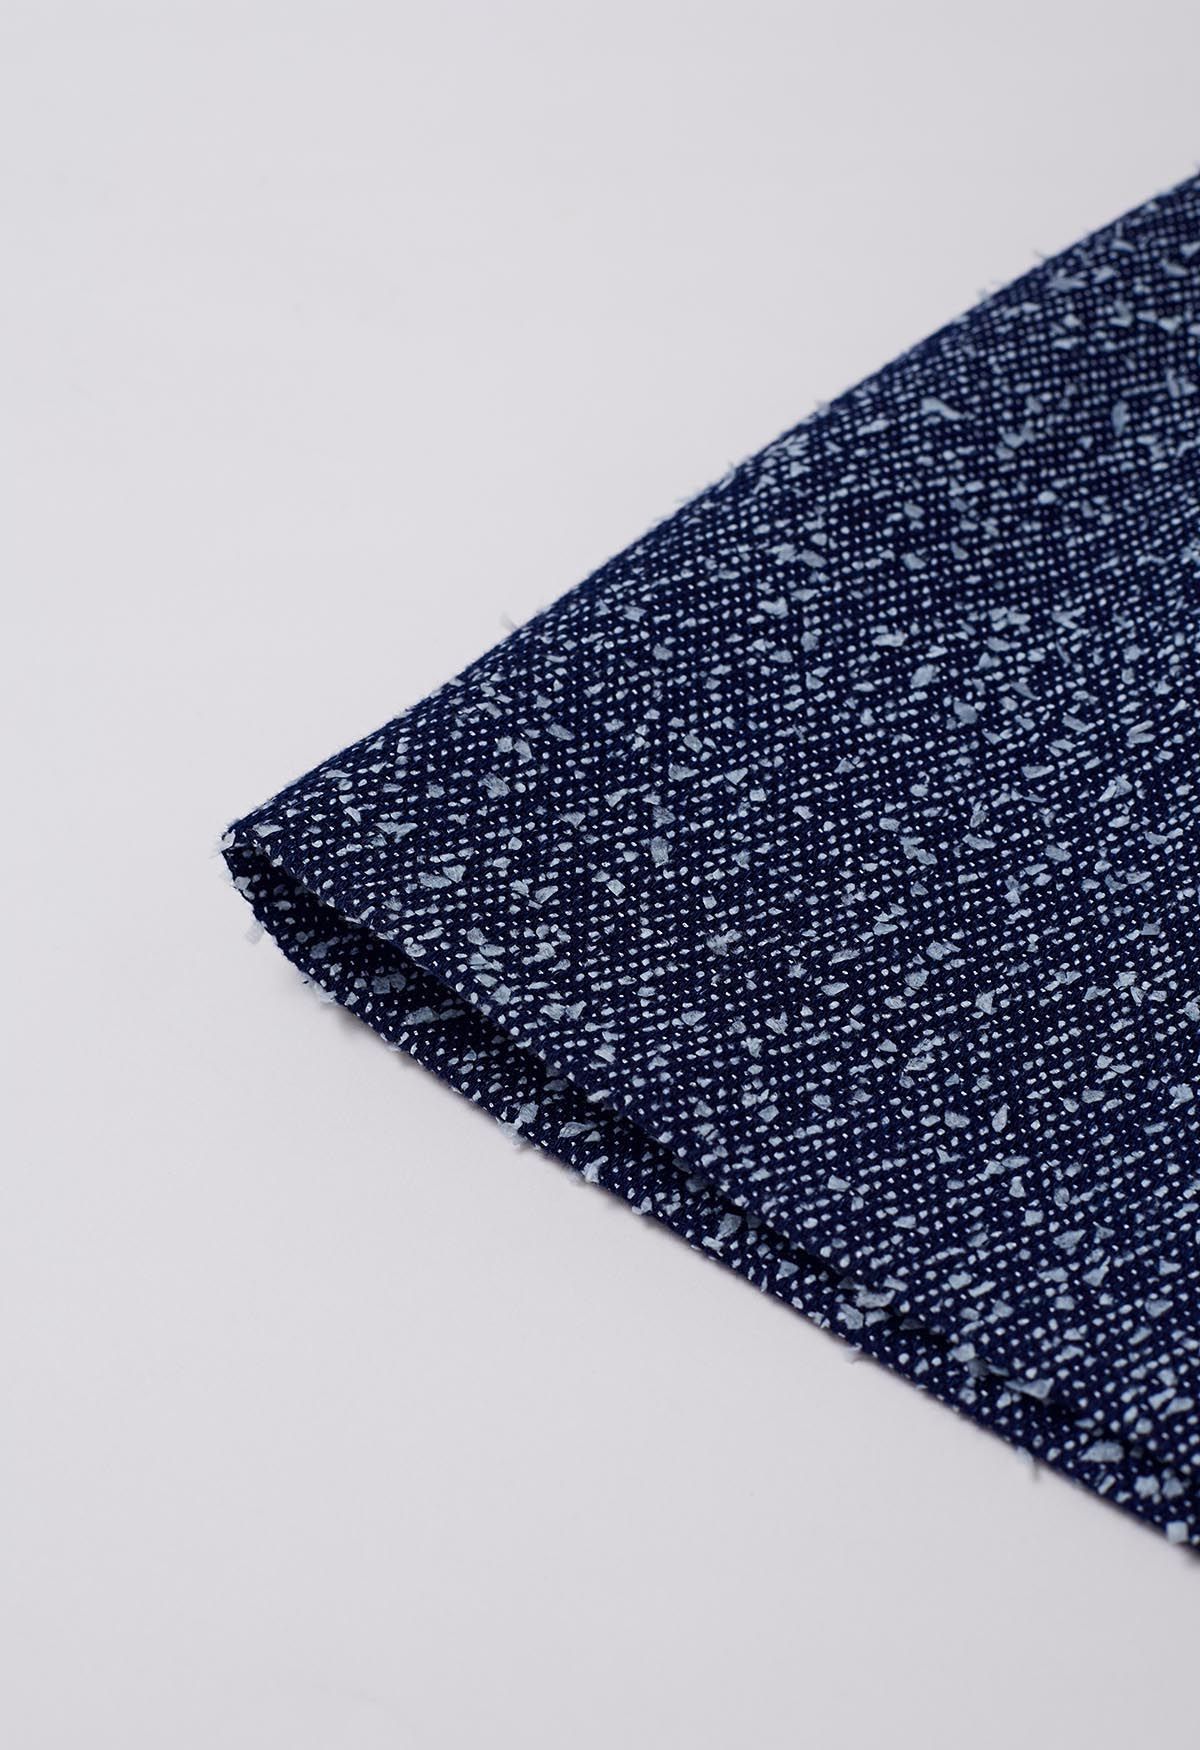 Mini-jupe en tweed boutonnée de couleurs mélangées, bleu marine